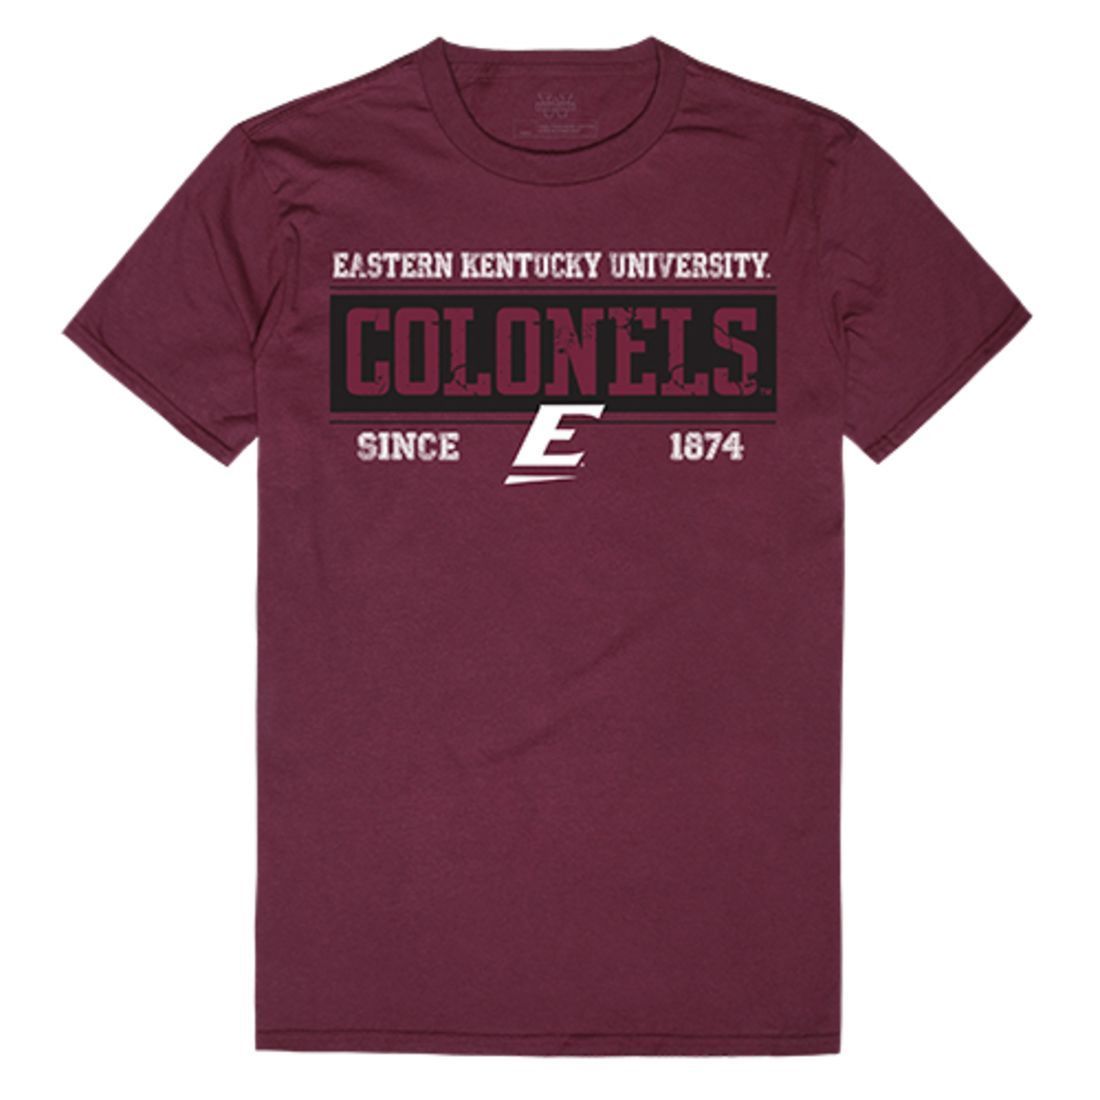 EKU Eastern Kentucky University Colonels NCAA Established Tees T-Shirt Maroon-Campus-Wardrobe